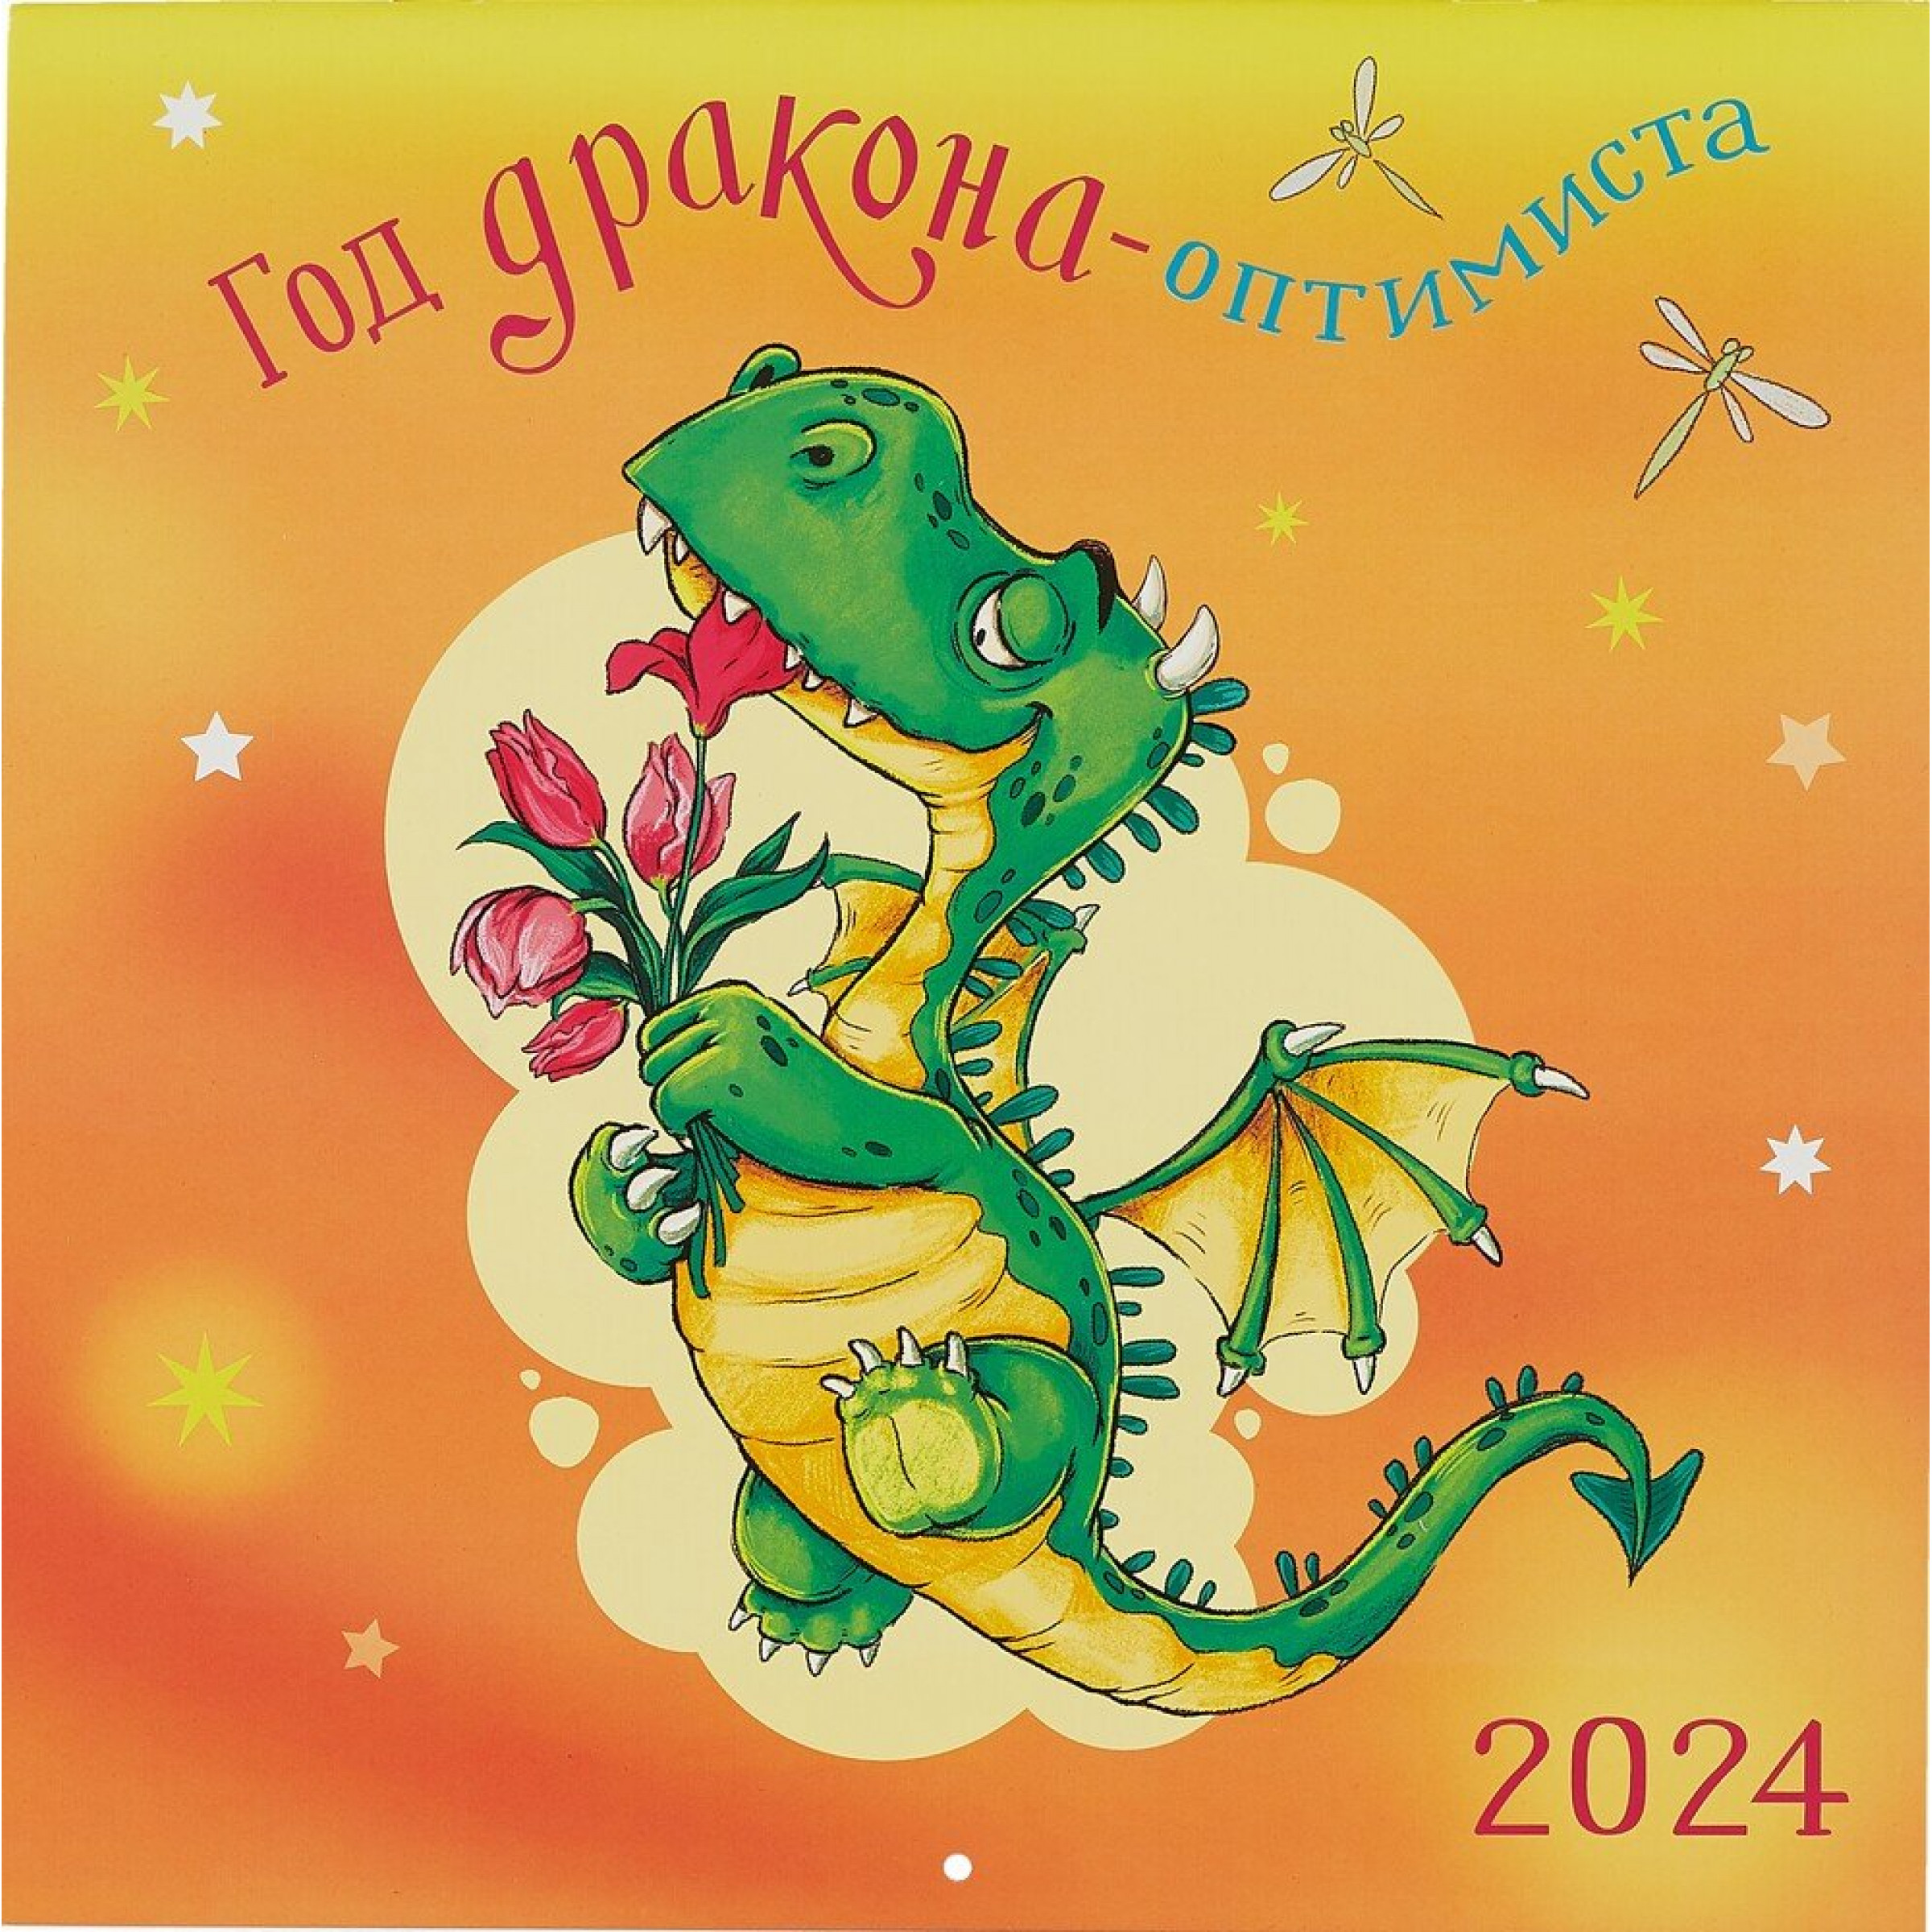 Календарь настенный 2024 Год дракона- оптимиста, 290 х 290 мм